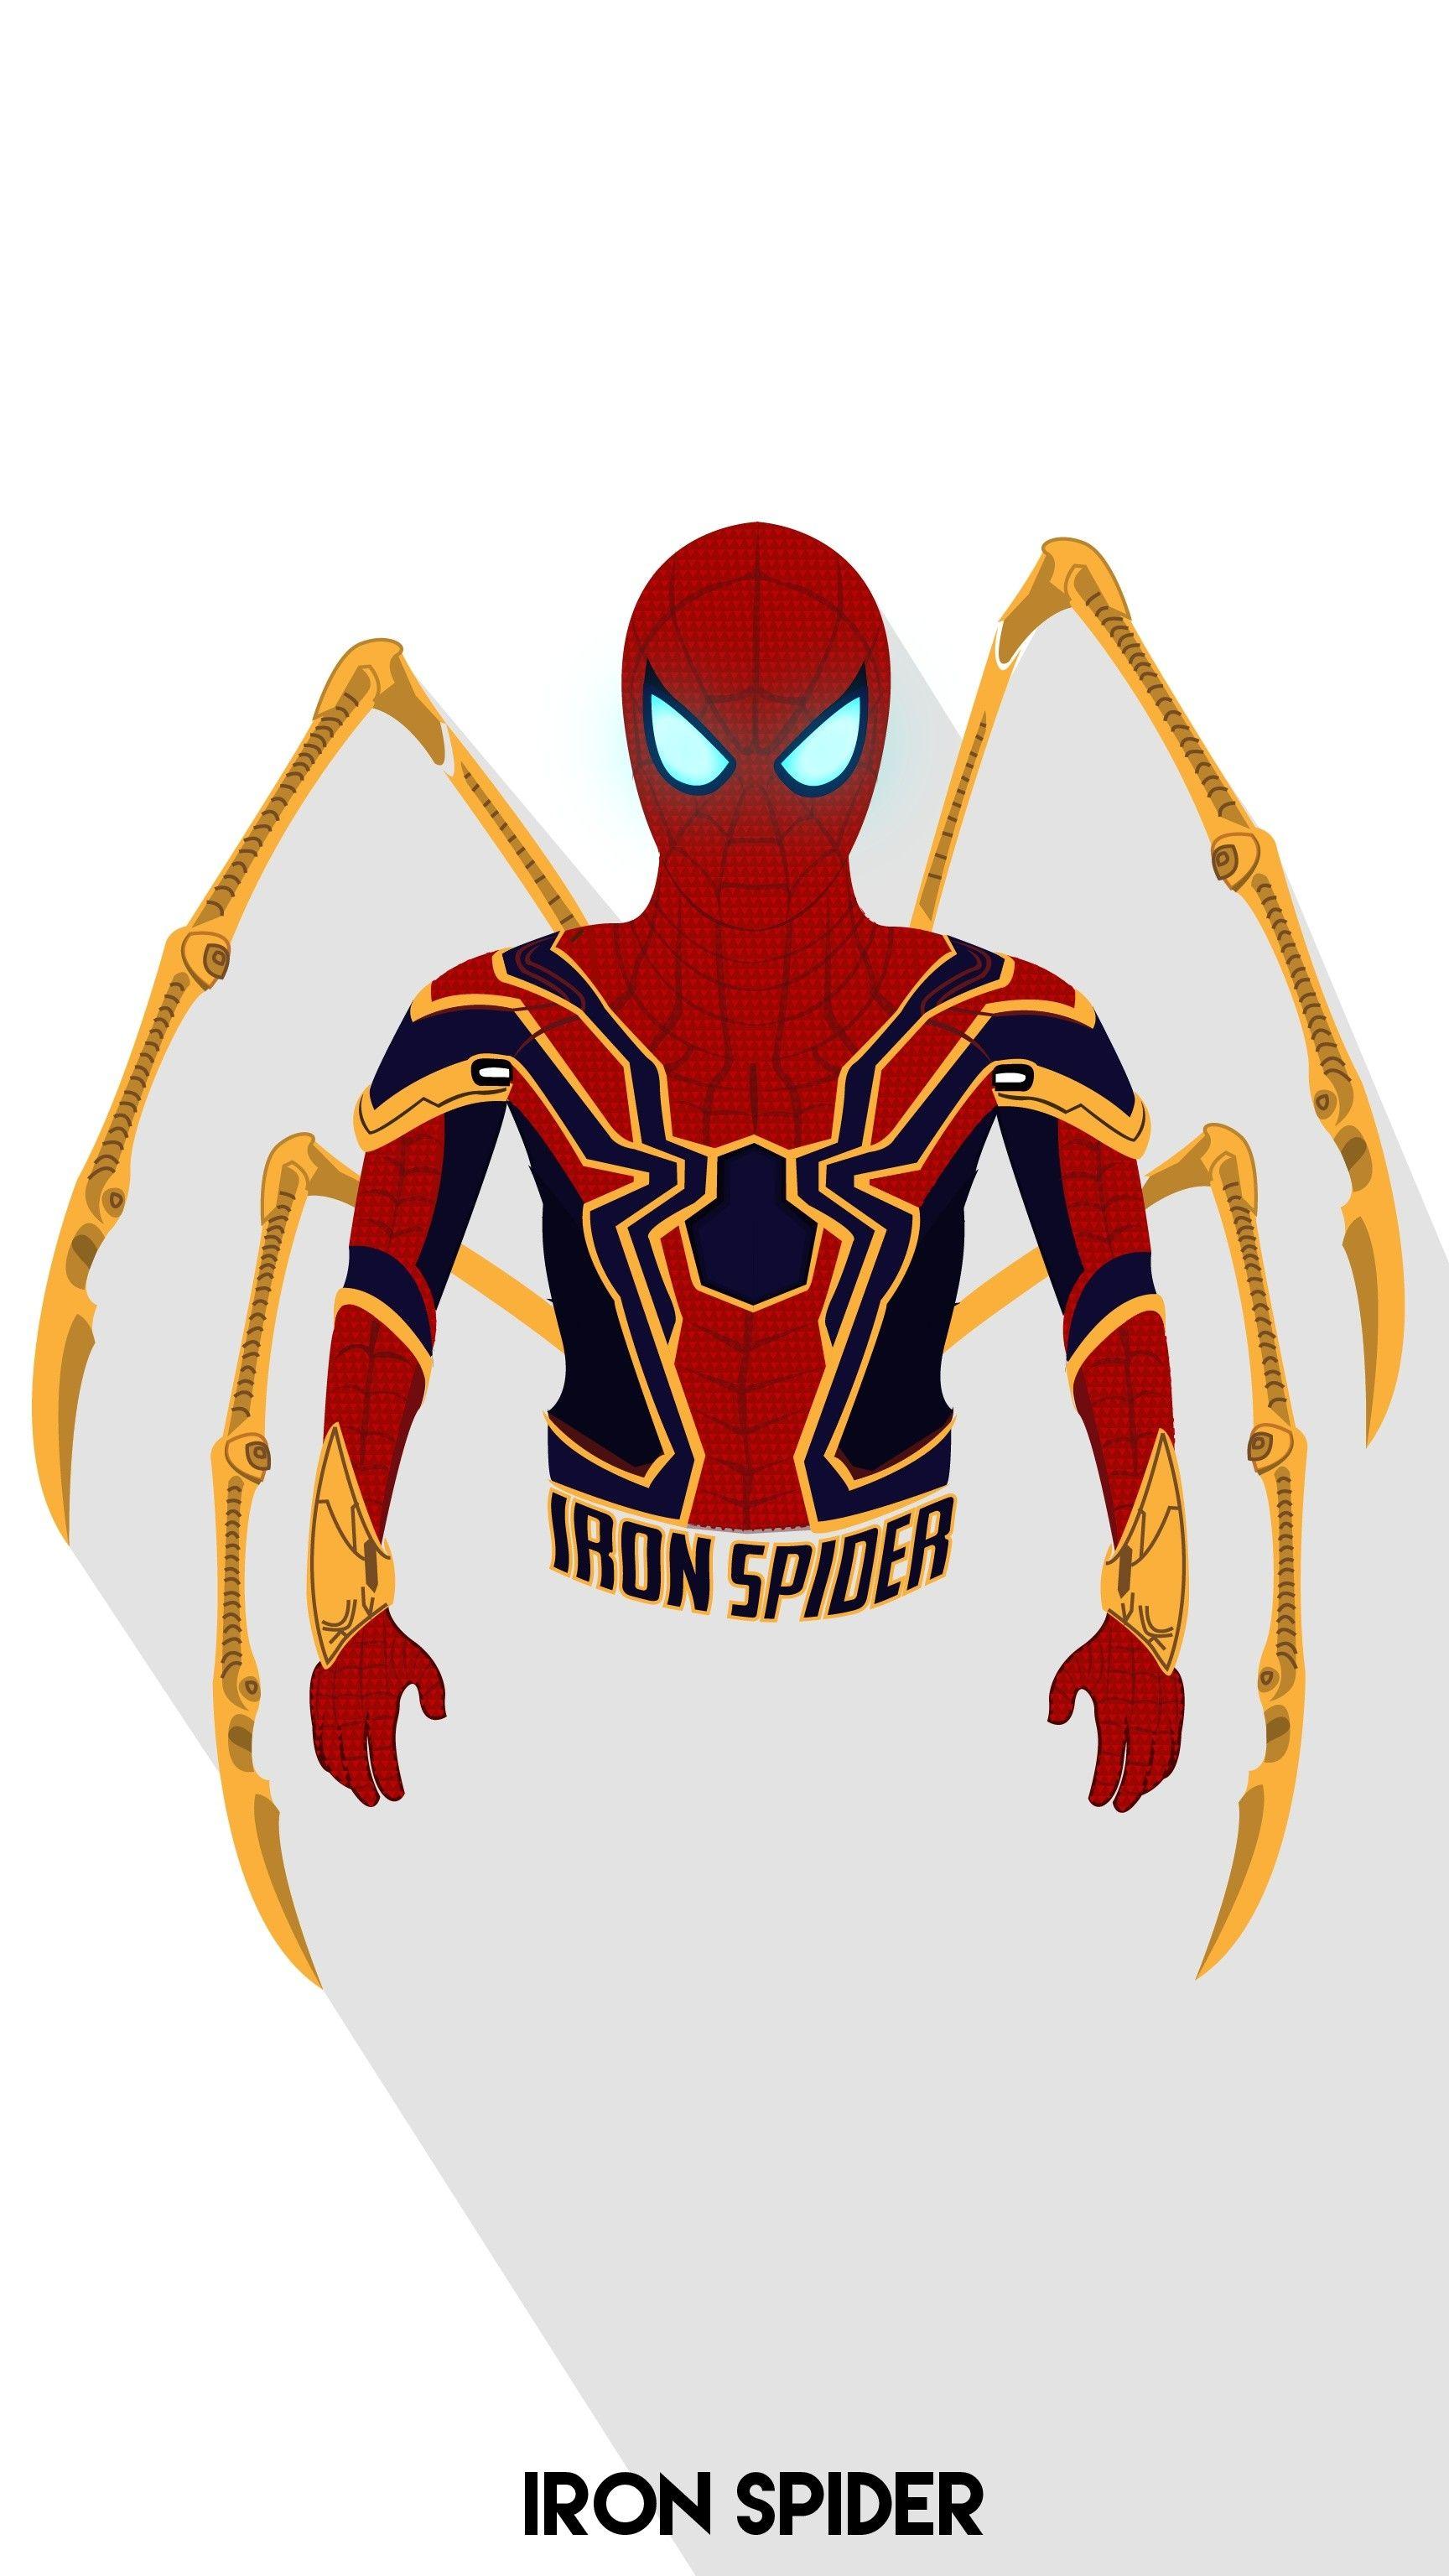 Iron Spider Logo - ArtStation - Iron Spider, Atharva Jumde